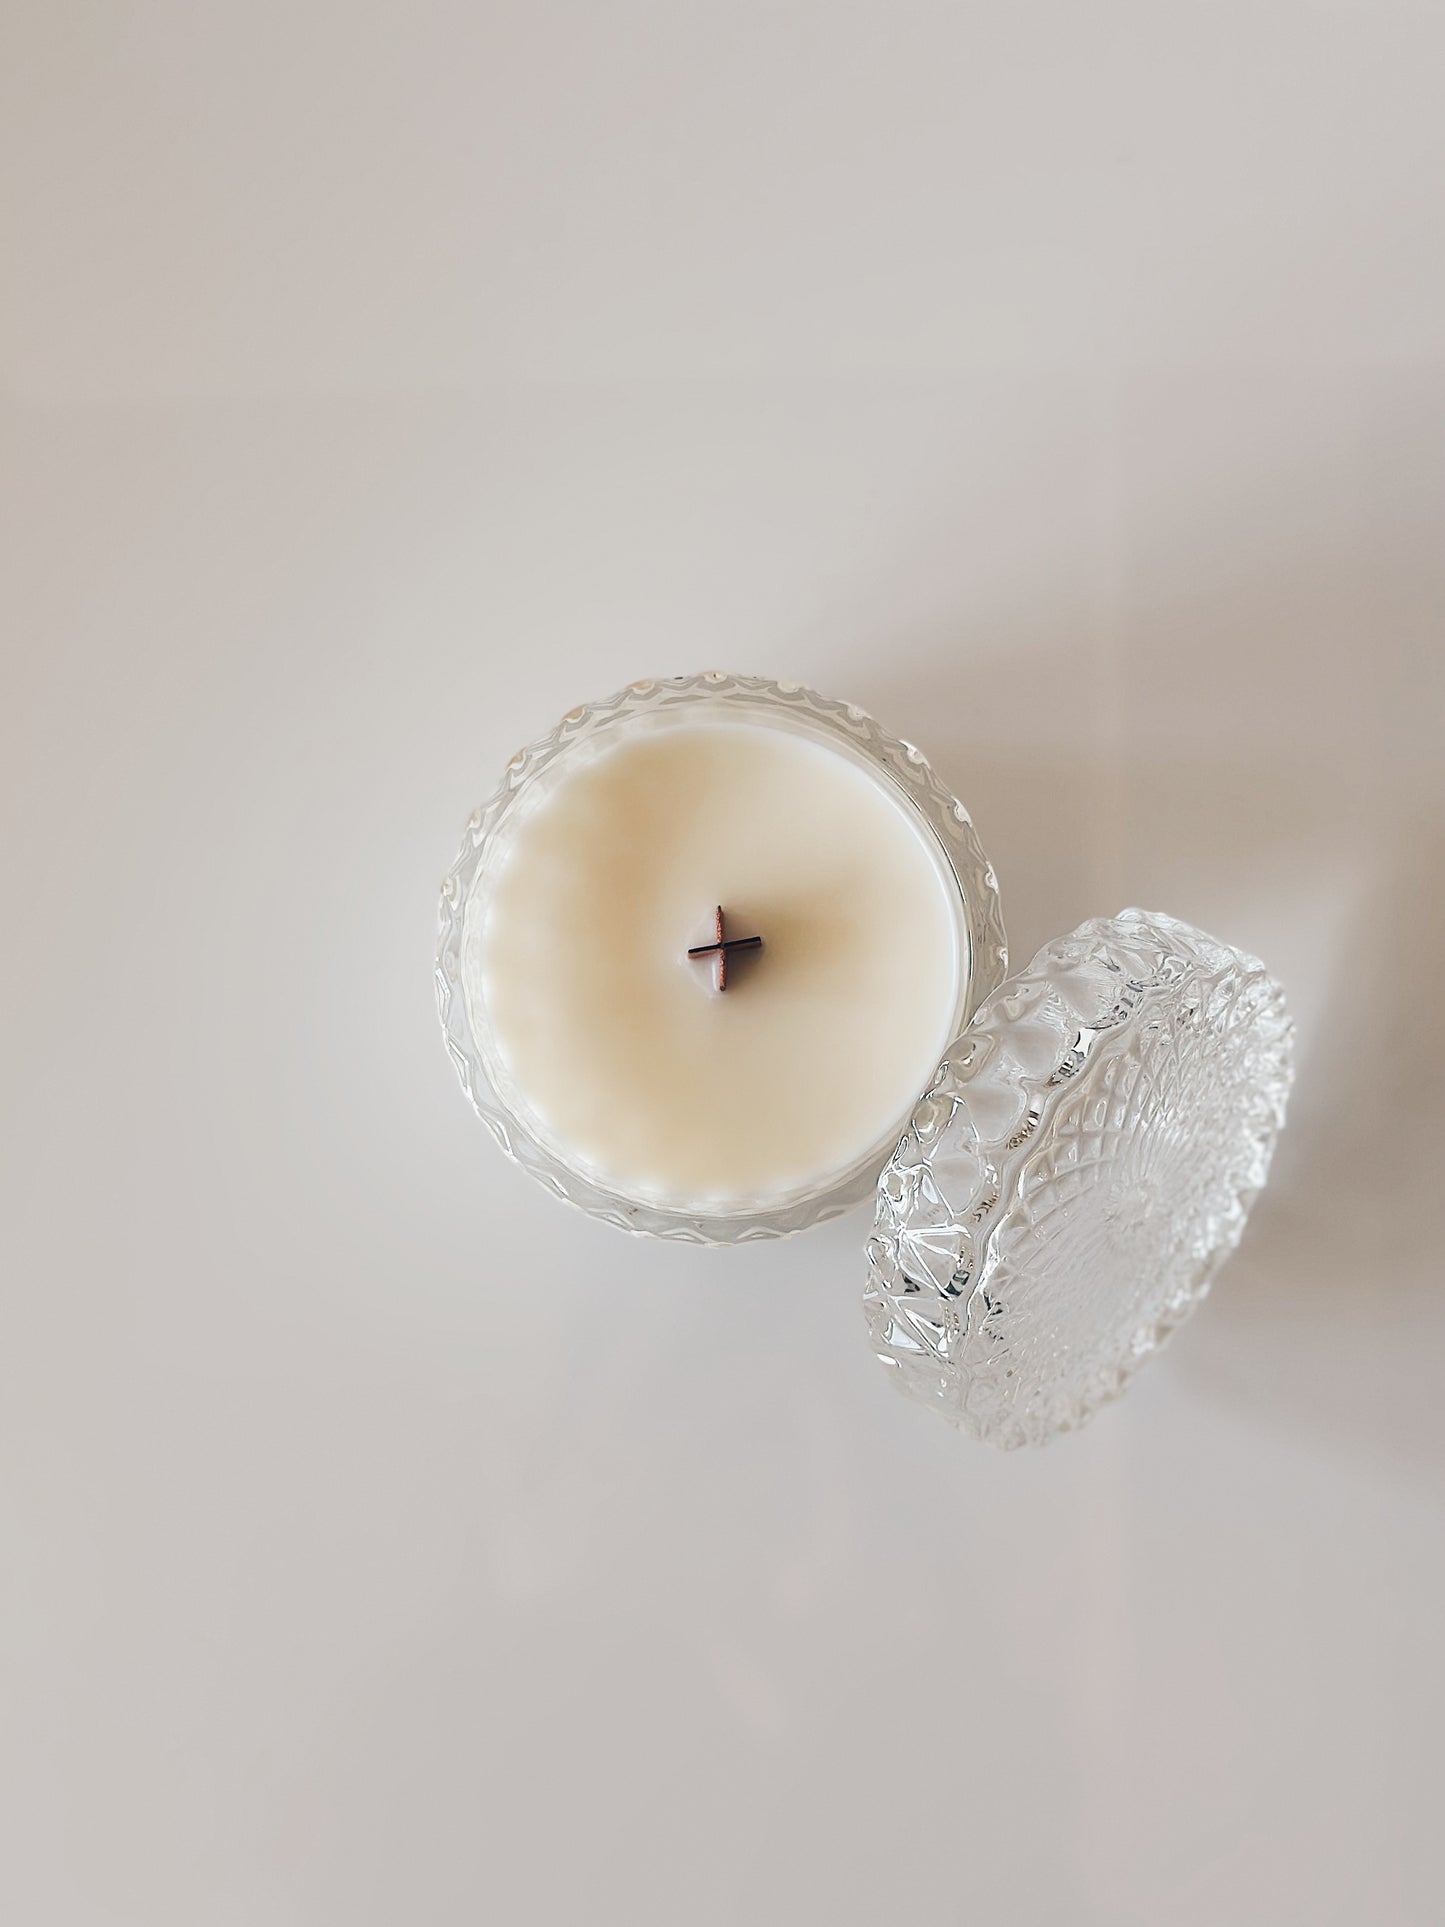 en mer LTD | create your own | wooden wick soy wax candle